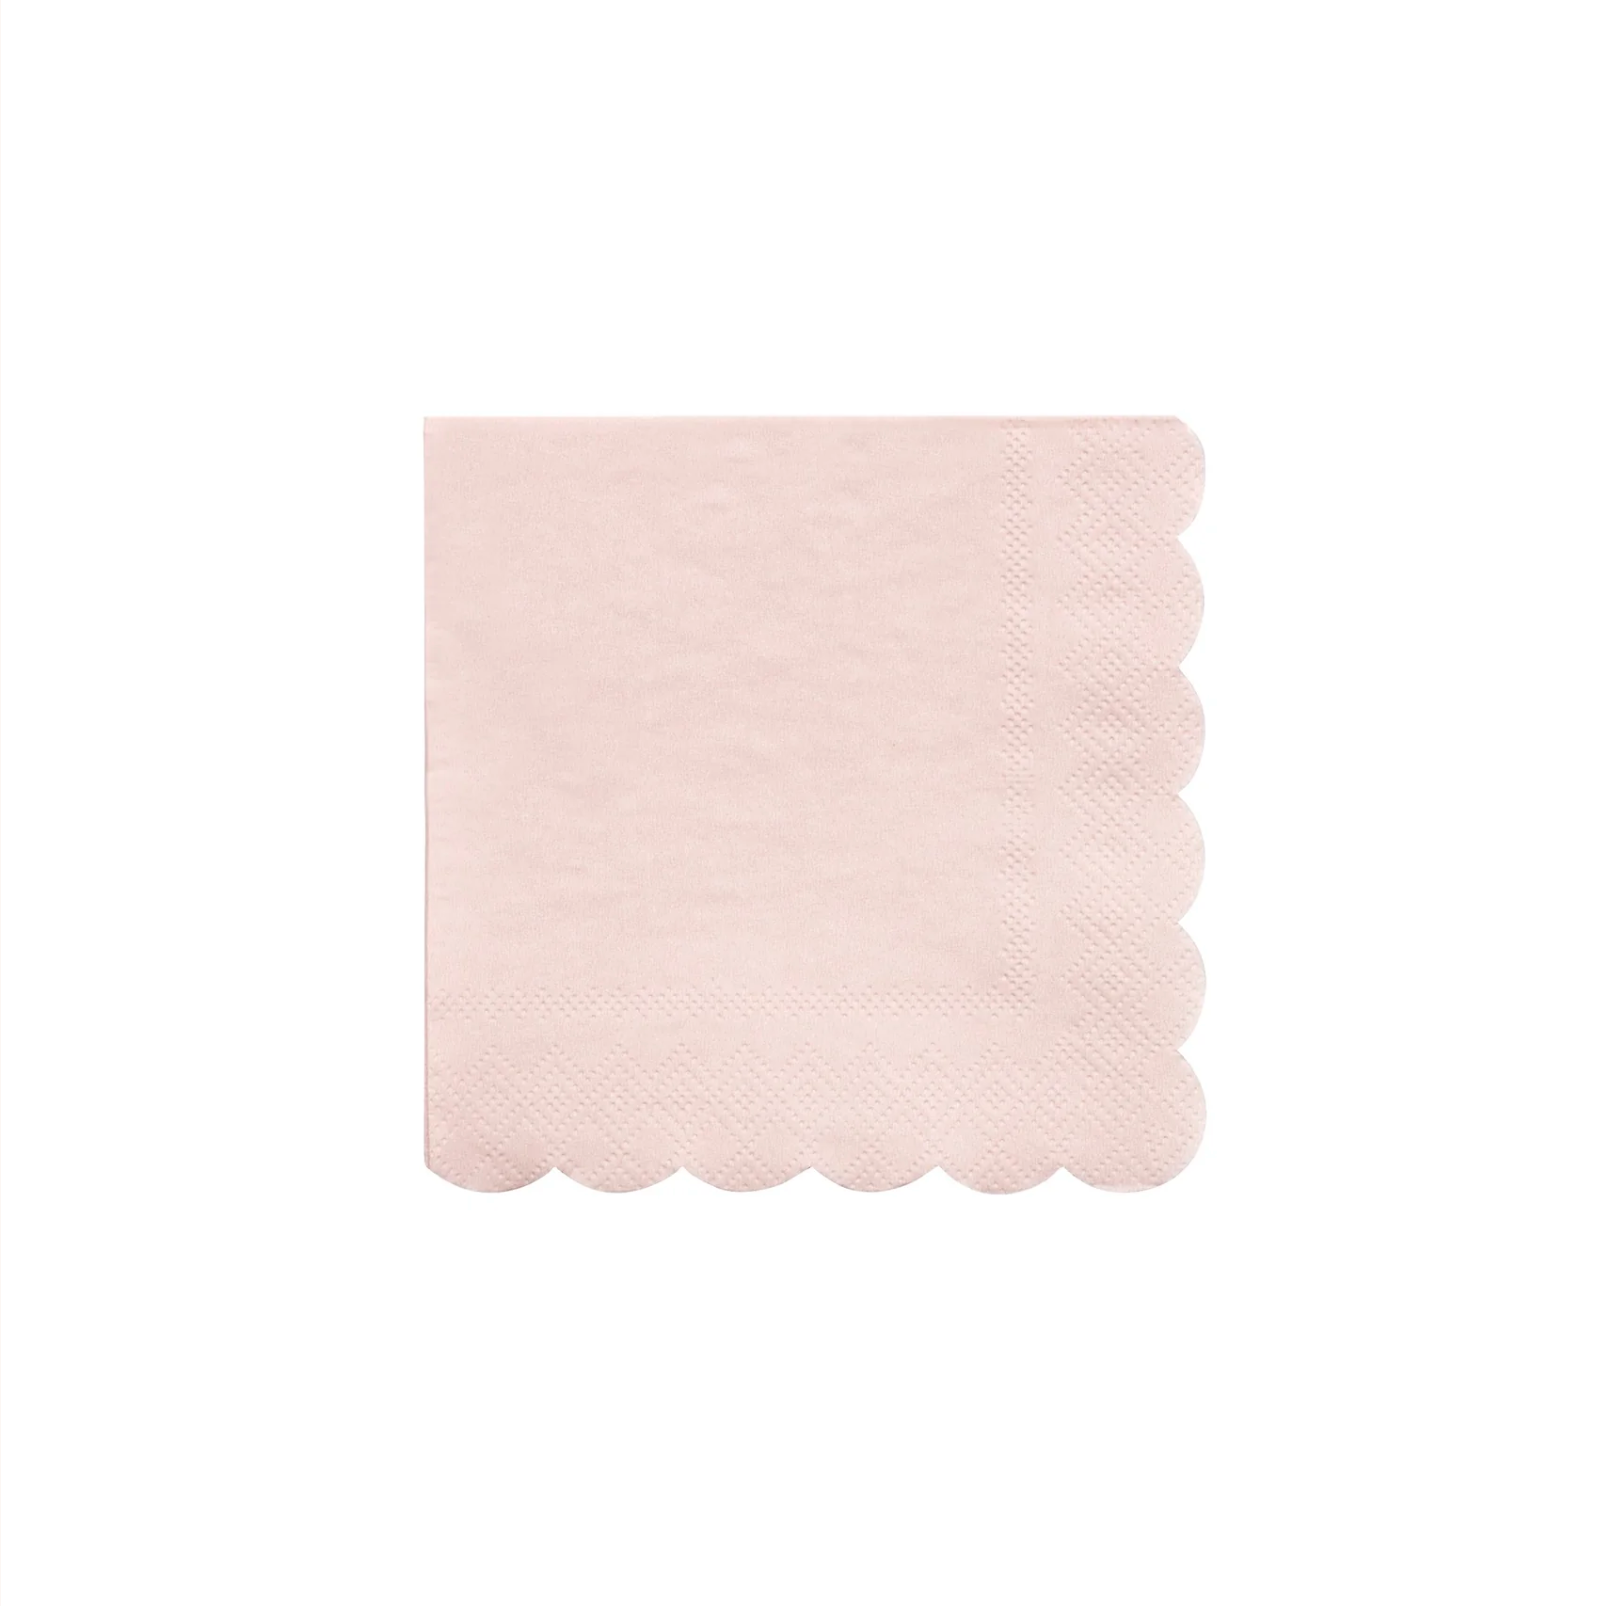 Pale Pink Small Napkin